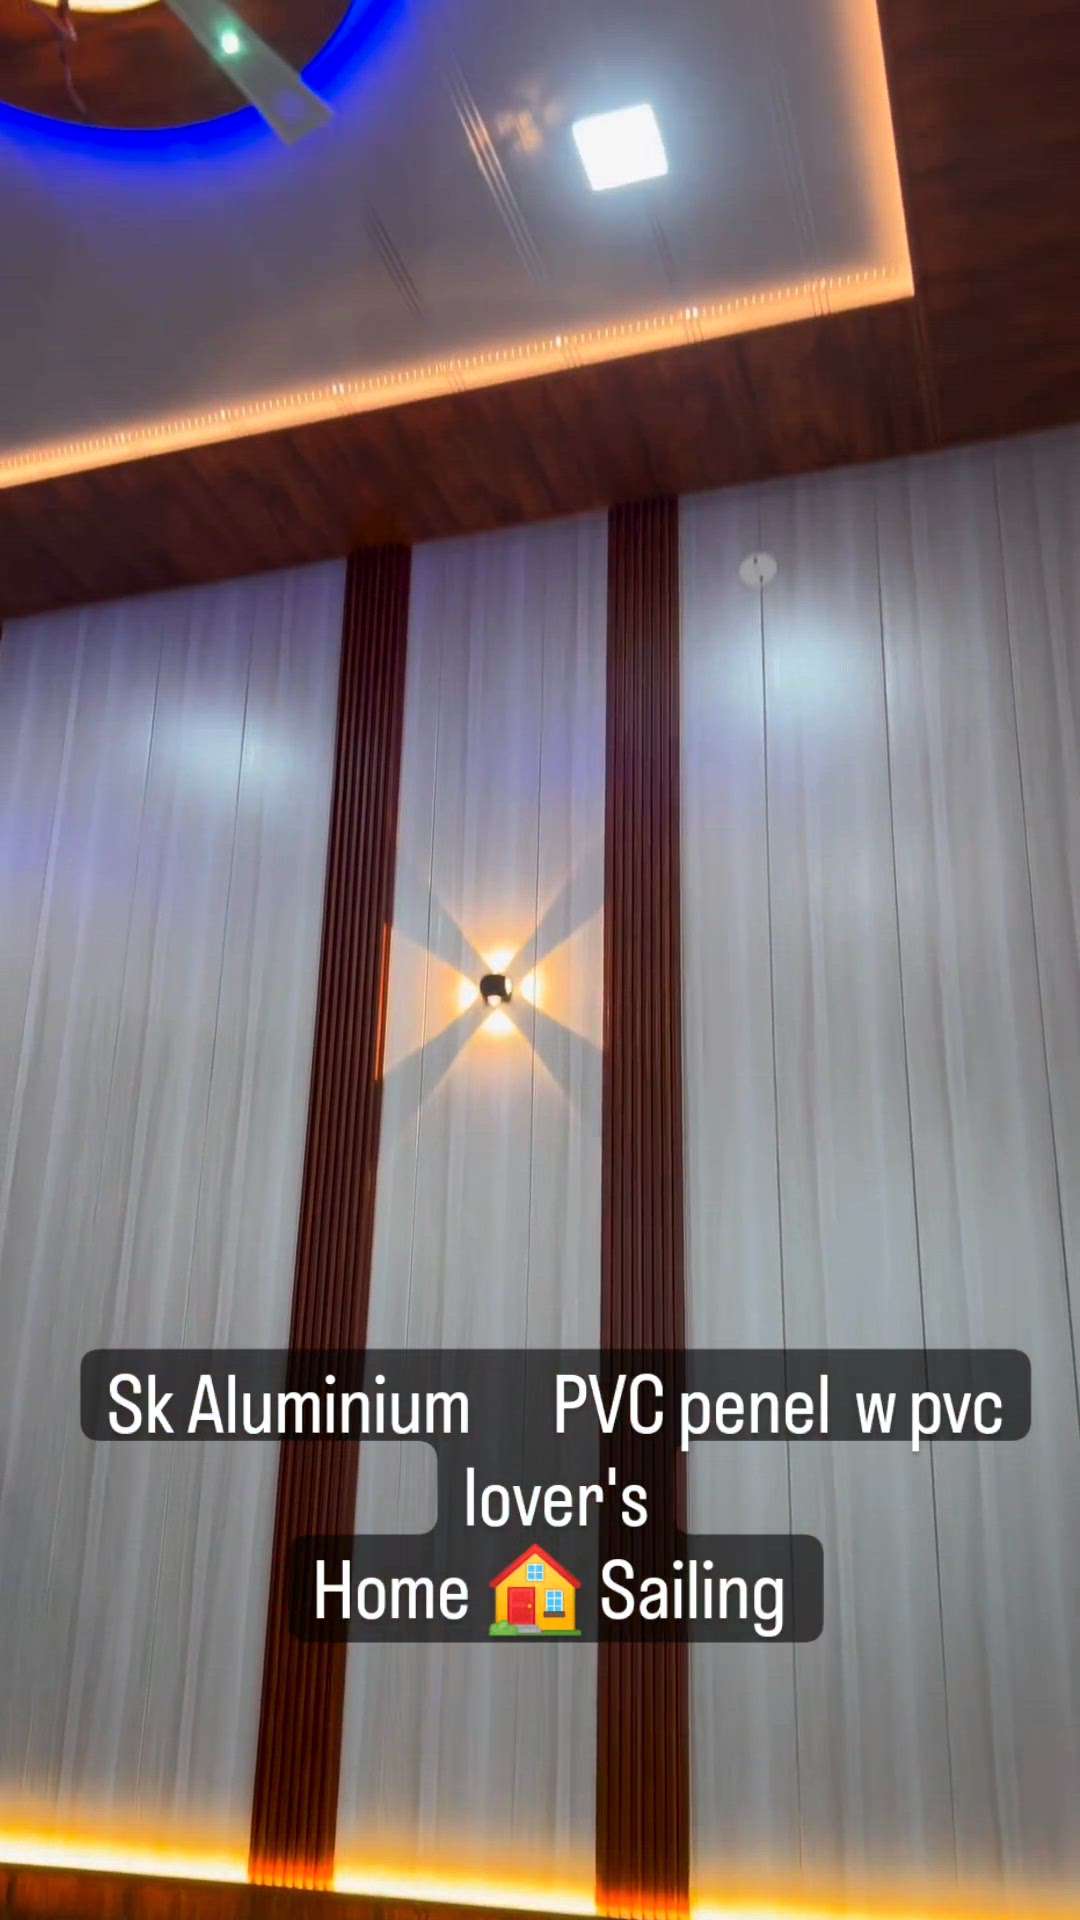 pvc penel wpvc and Wall siling
sk Aluminium Work palwal